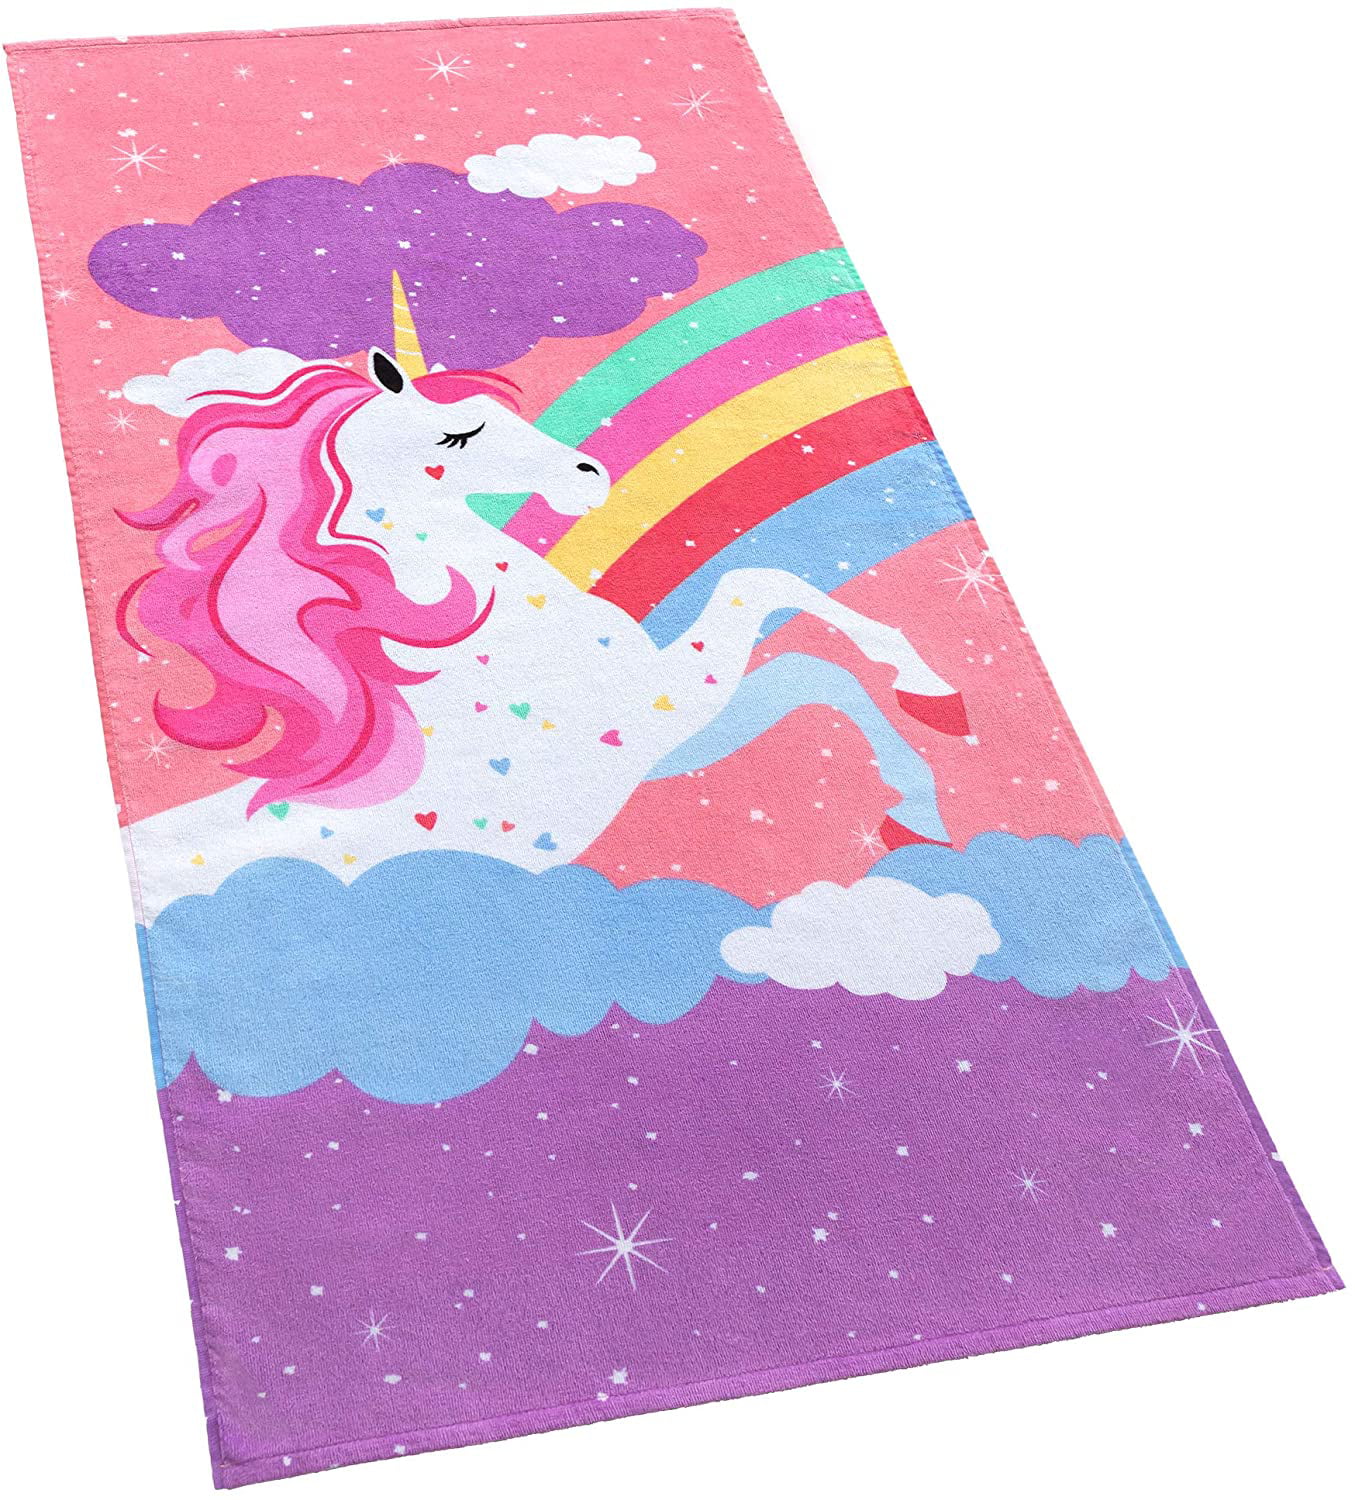 100% Cotton 70 x 130cm Love Unicorn Beach Towel Pink 28 x 51 inches 